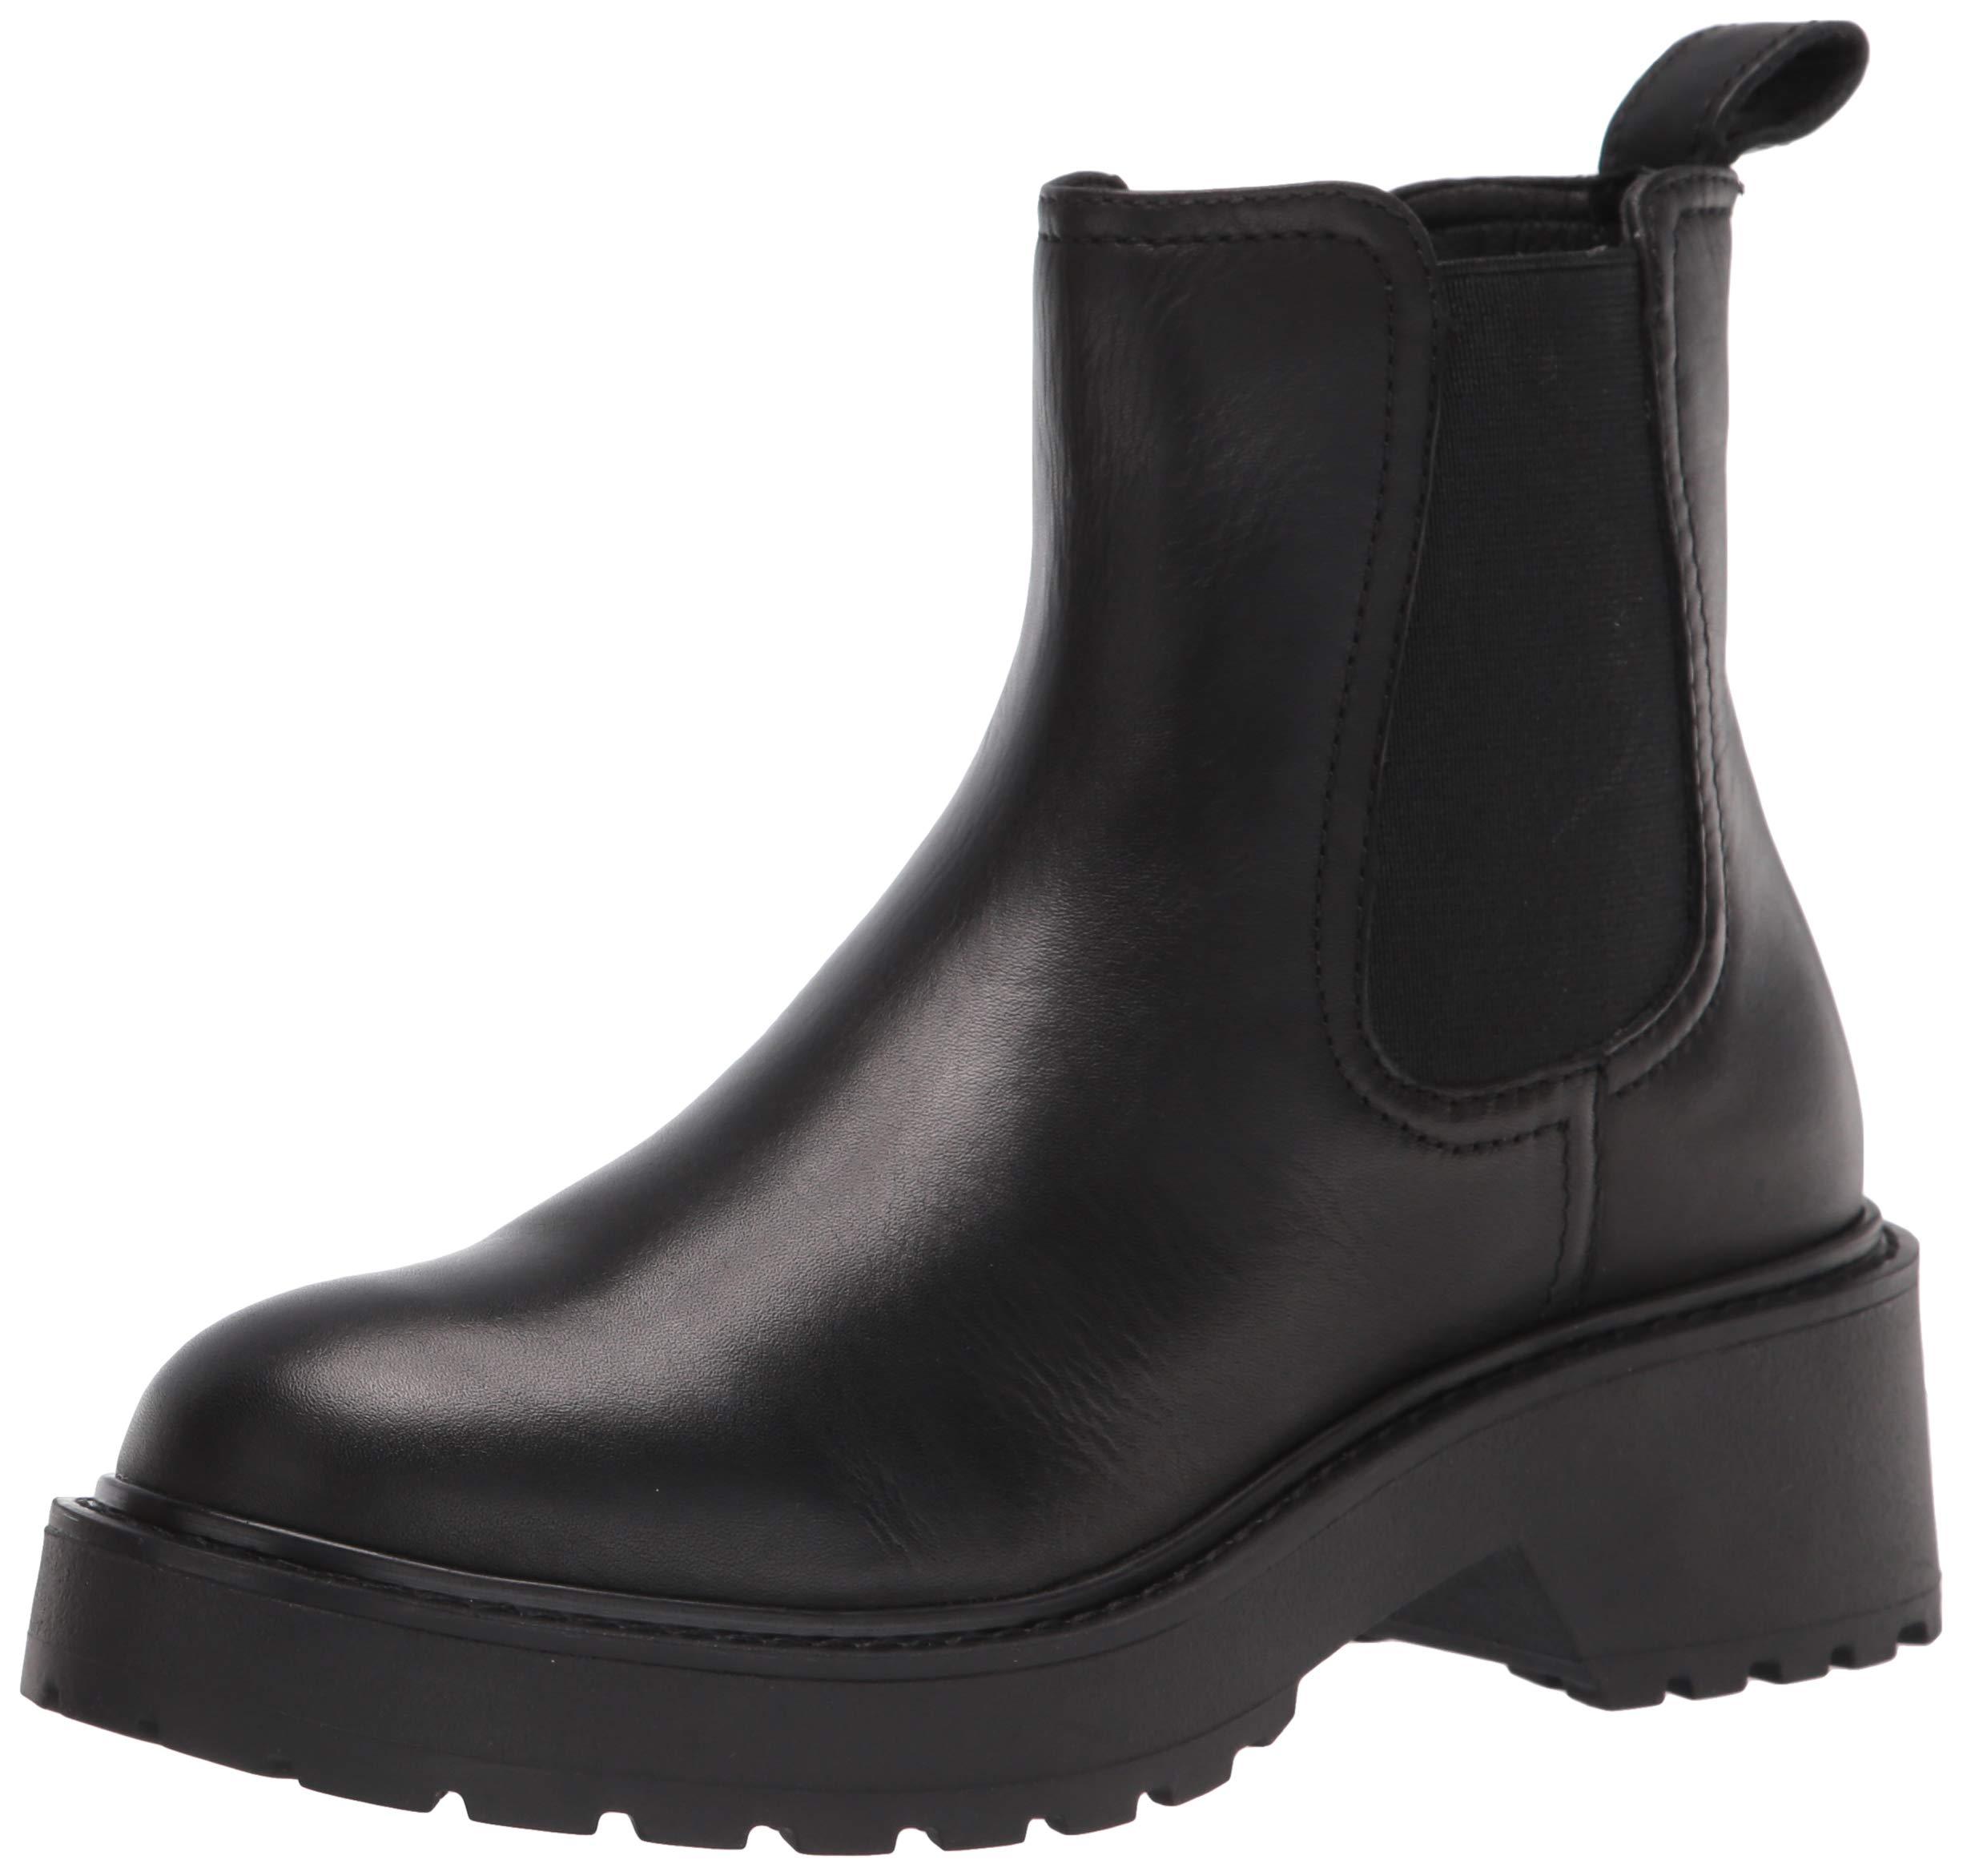 Steve Madden Trap Chelsea Boot in Black Leather (Black) | Lyst